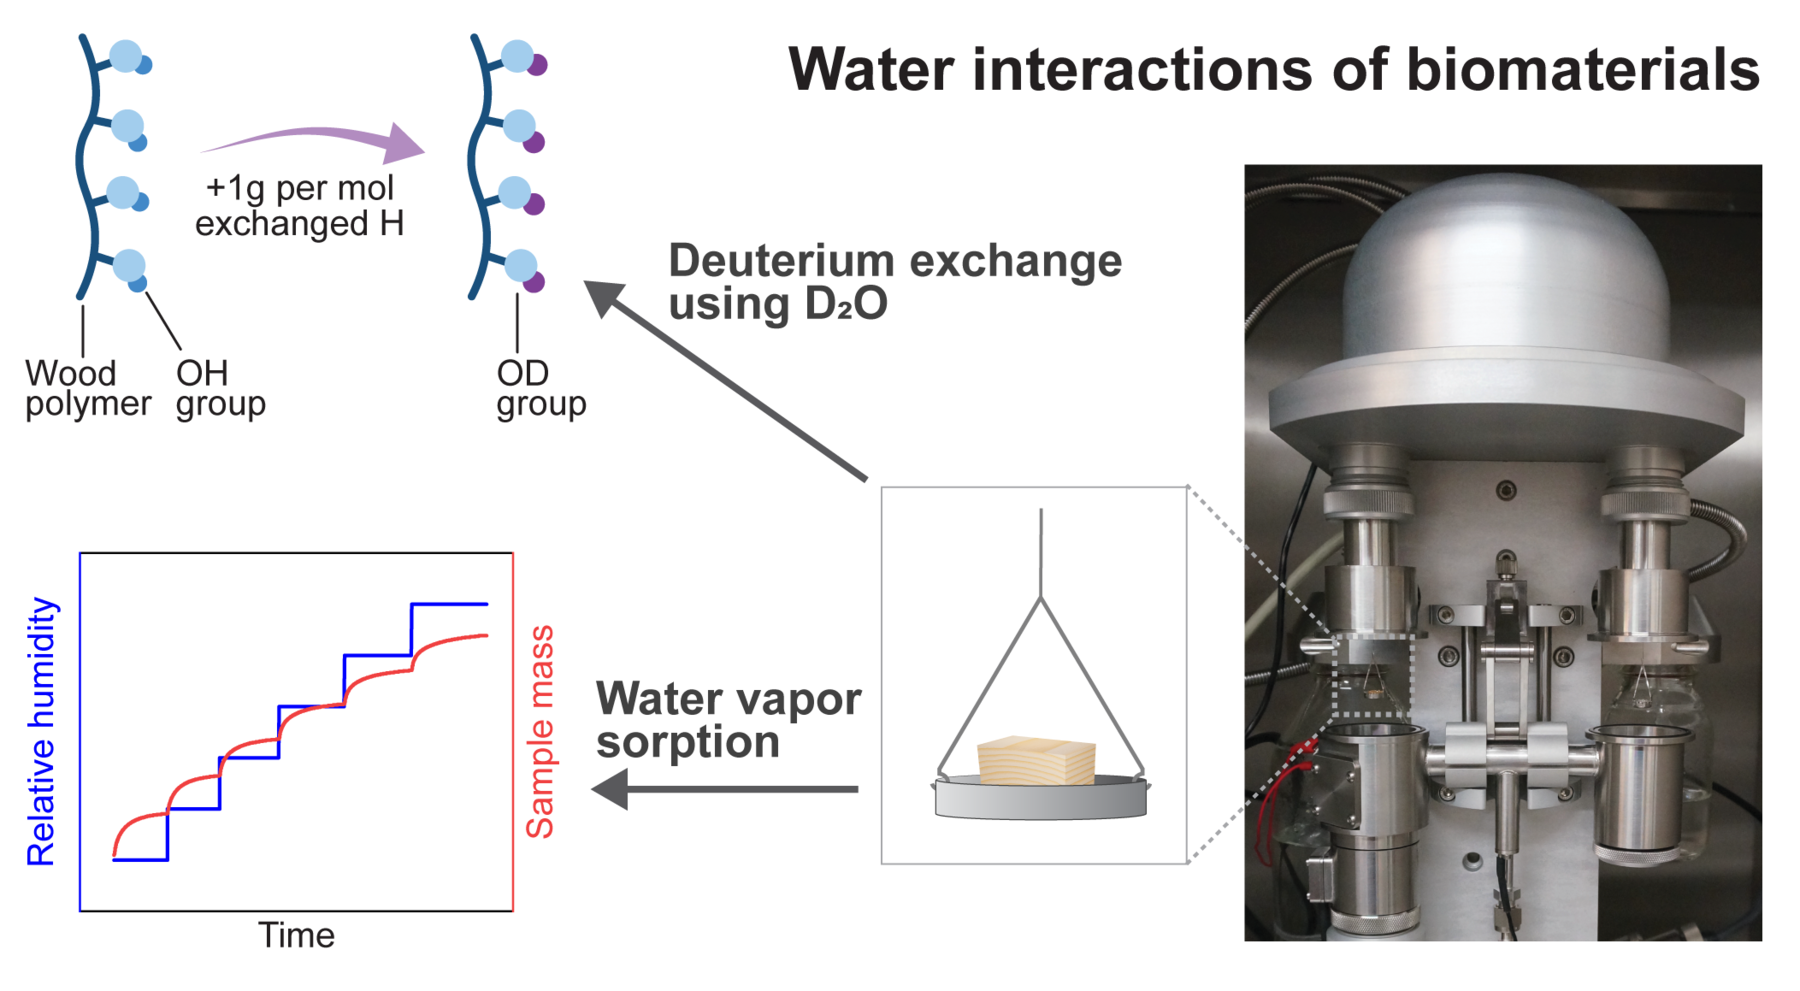 CHEM_Bio_Water interactions of biomaterials